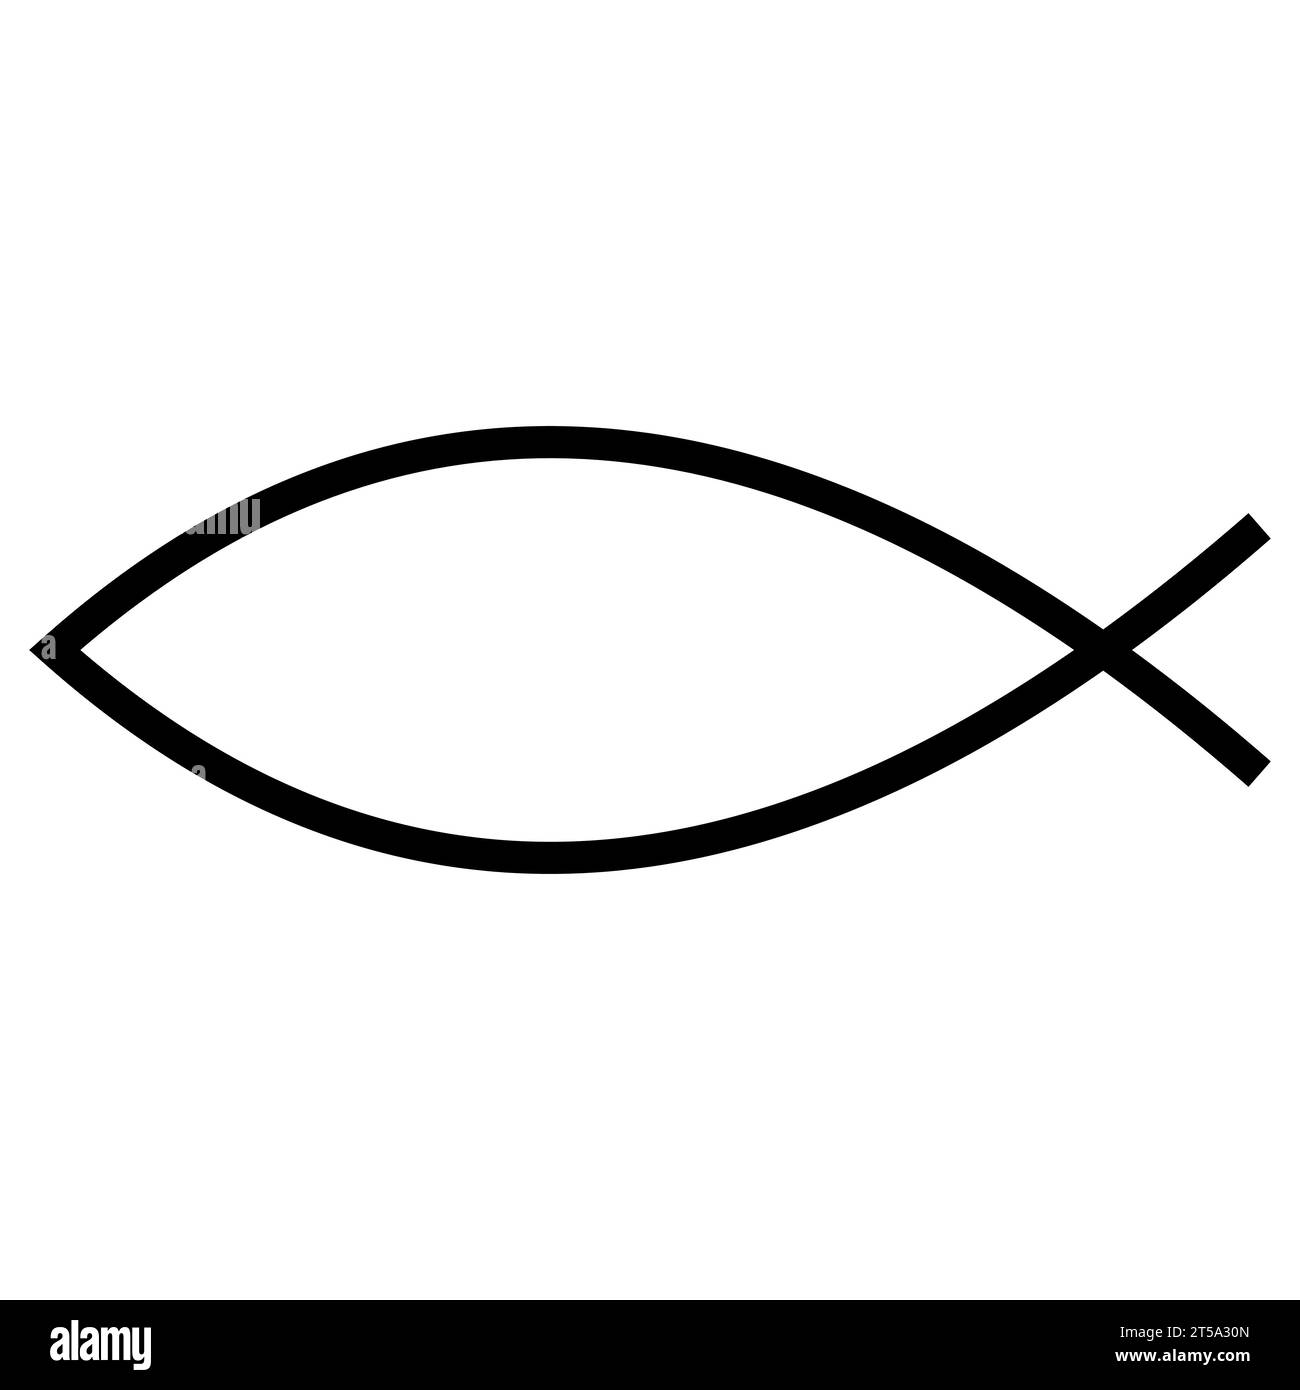 Christian ancient symbol, Jesus sign fish, fish horoscope constellation Stock Vector